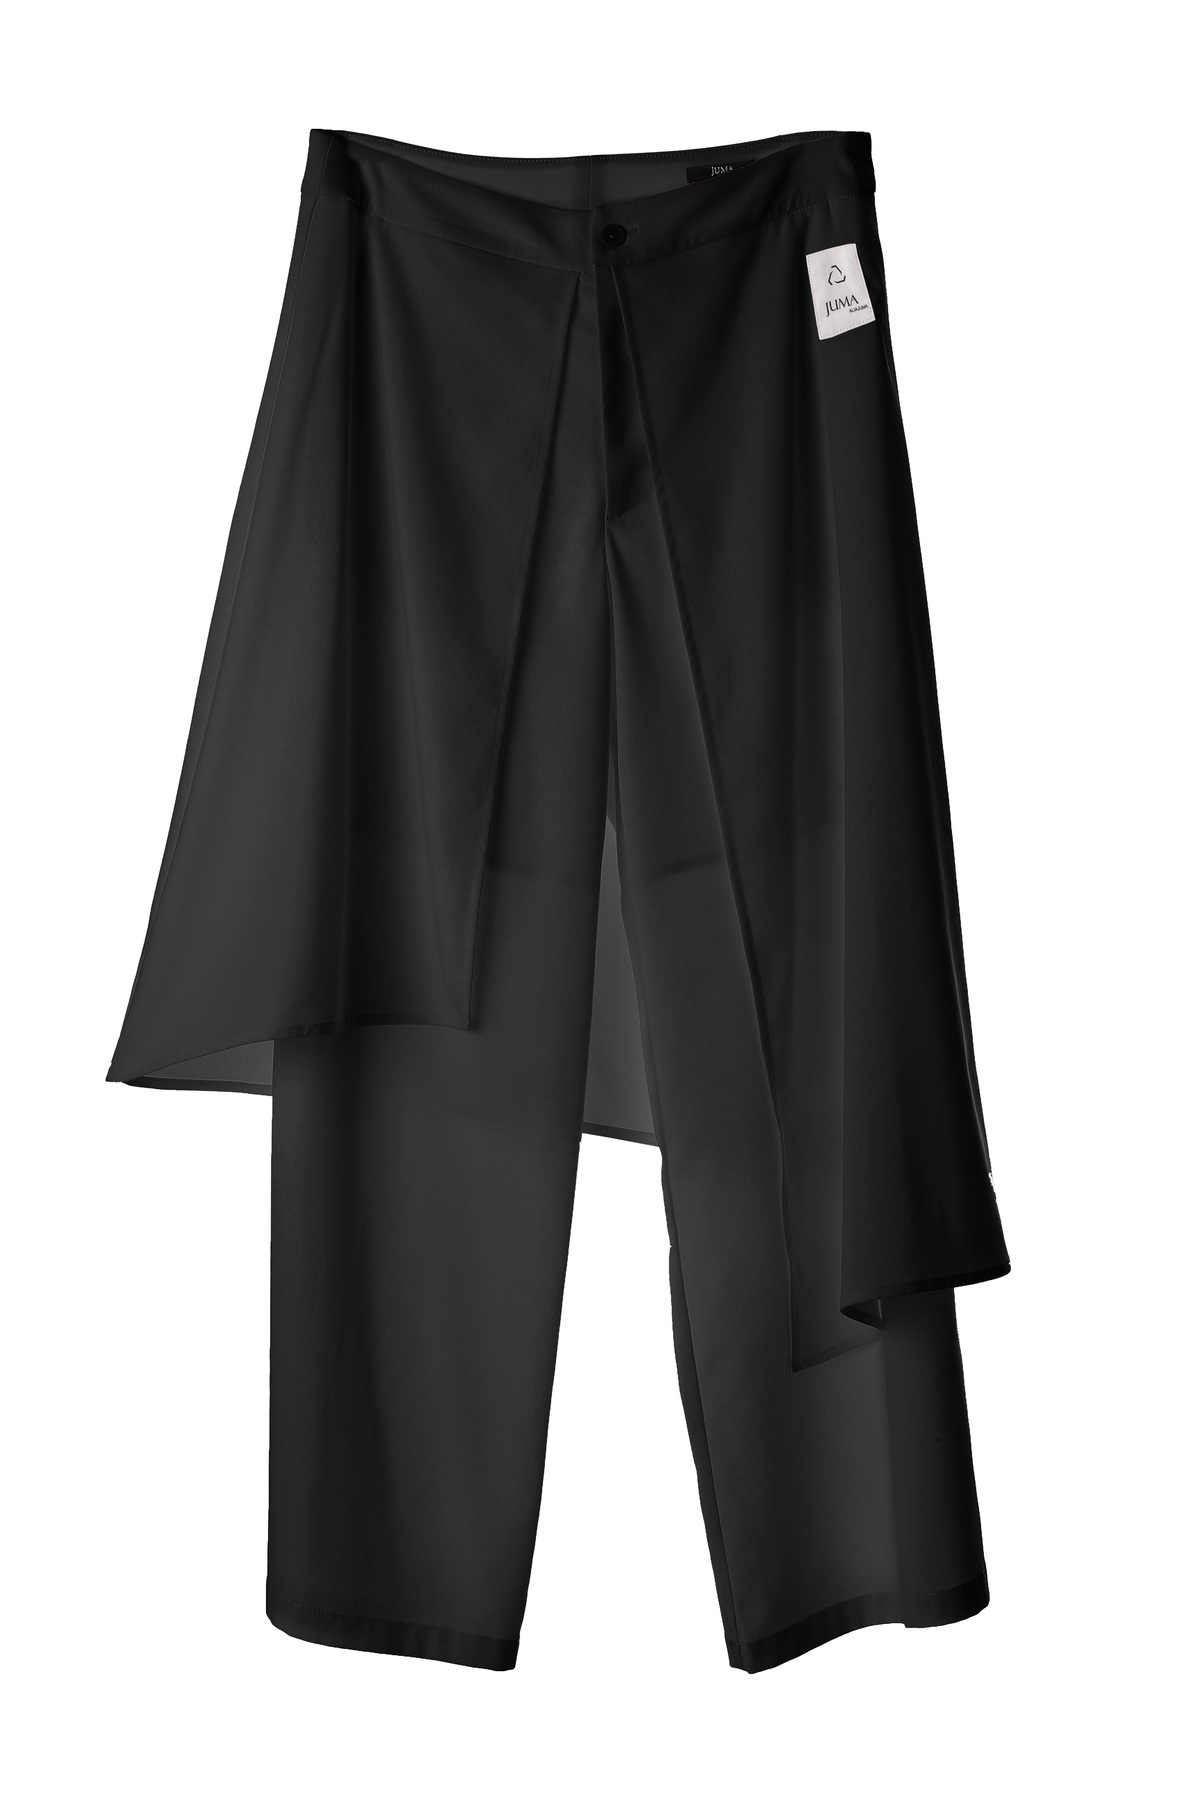 JUMA 裙裤-16个再生水瓶-黑色｜JUMA Wrap Skort - 16 Recycled Water Bottles - Black